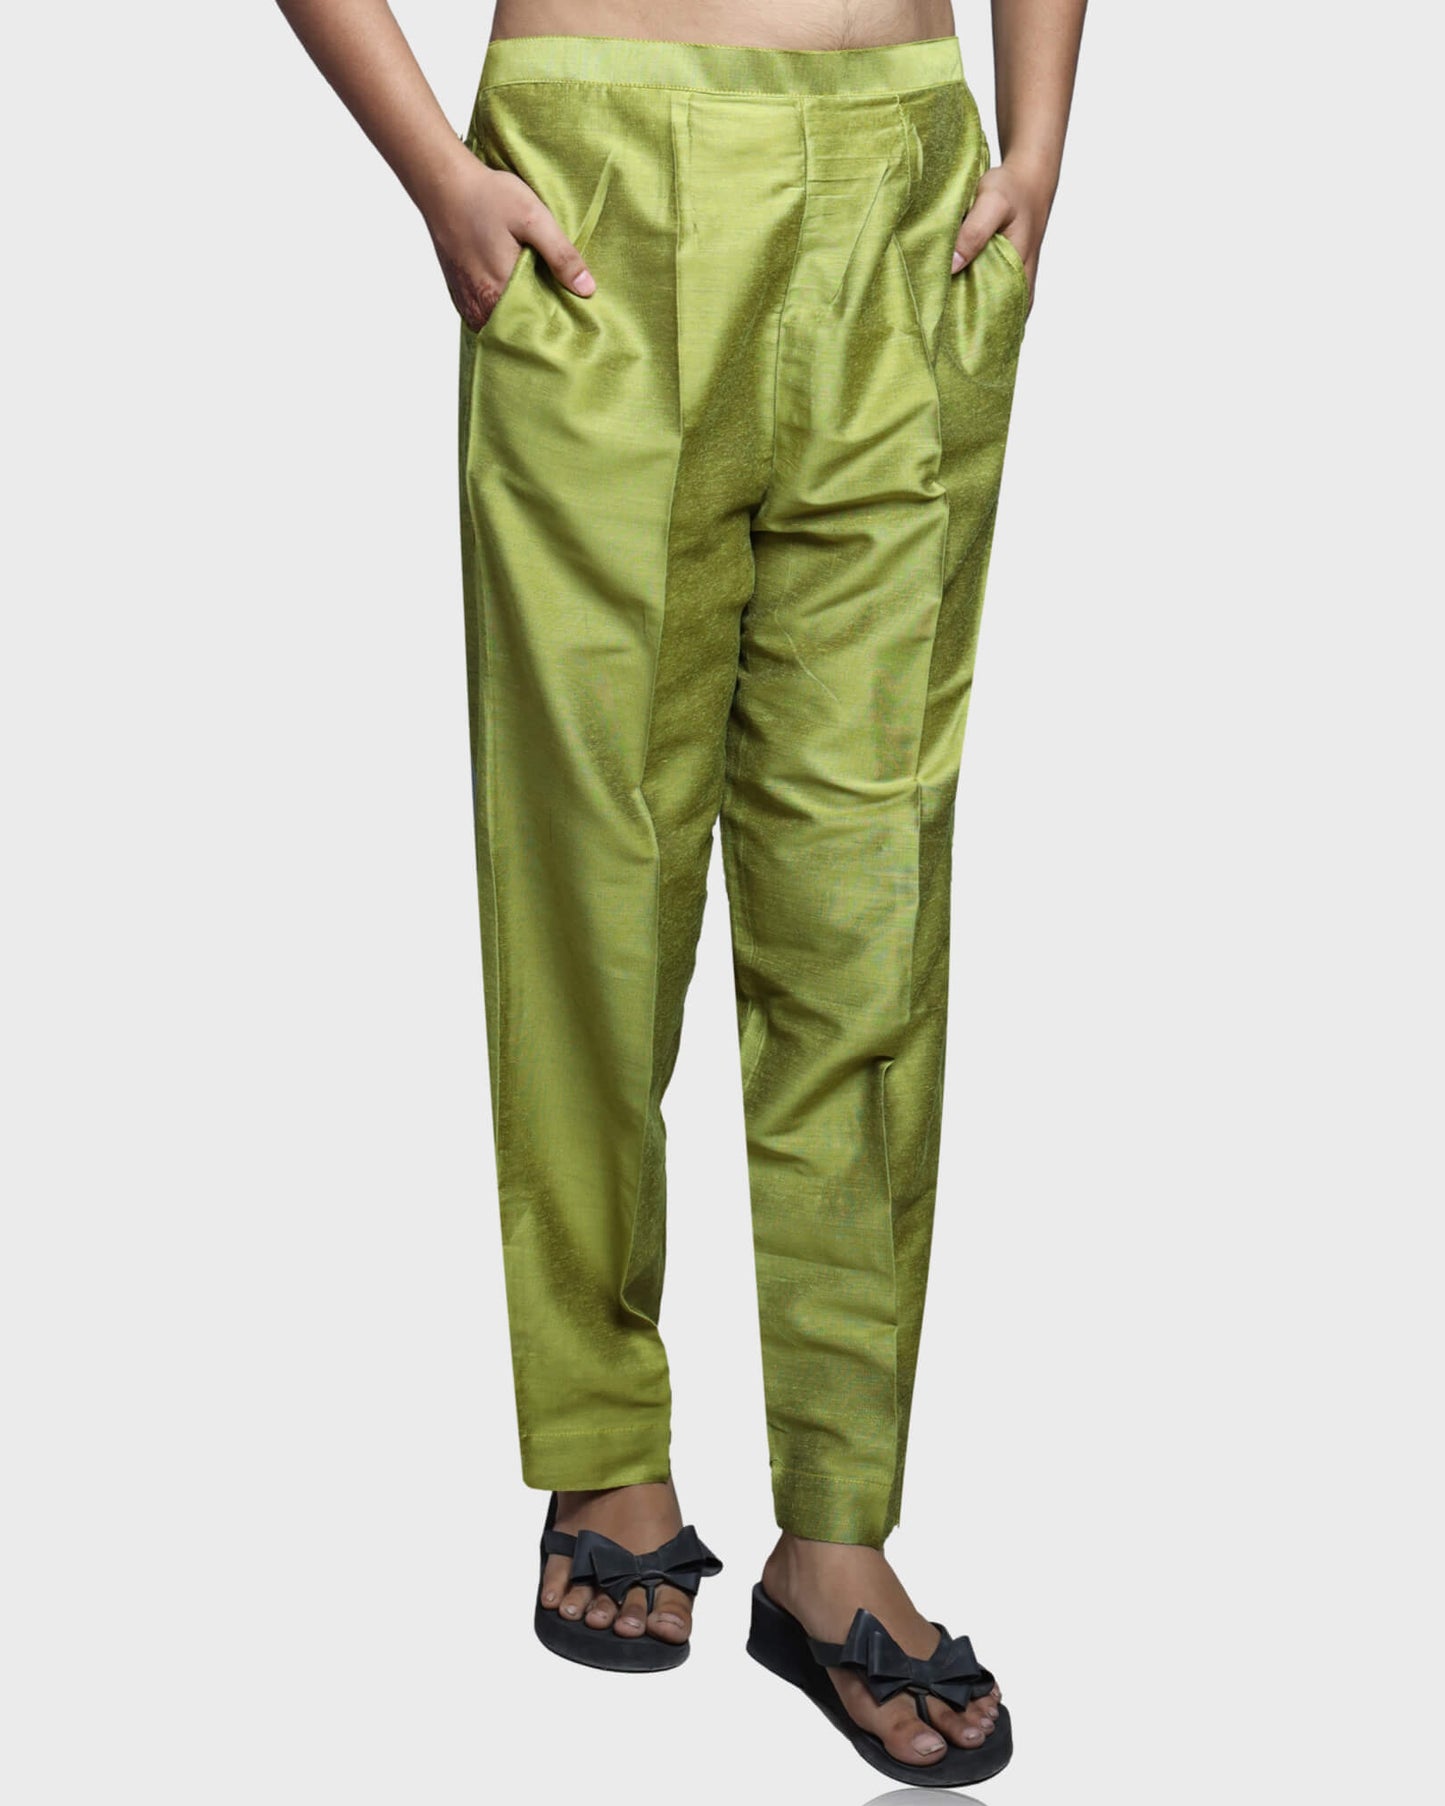 Silkfab Women's Banarasi Silk Pista Green Solid Kurti Pant Set - SILKFAB